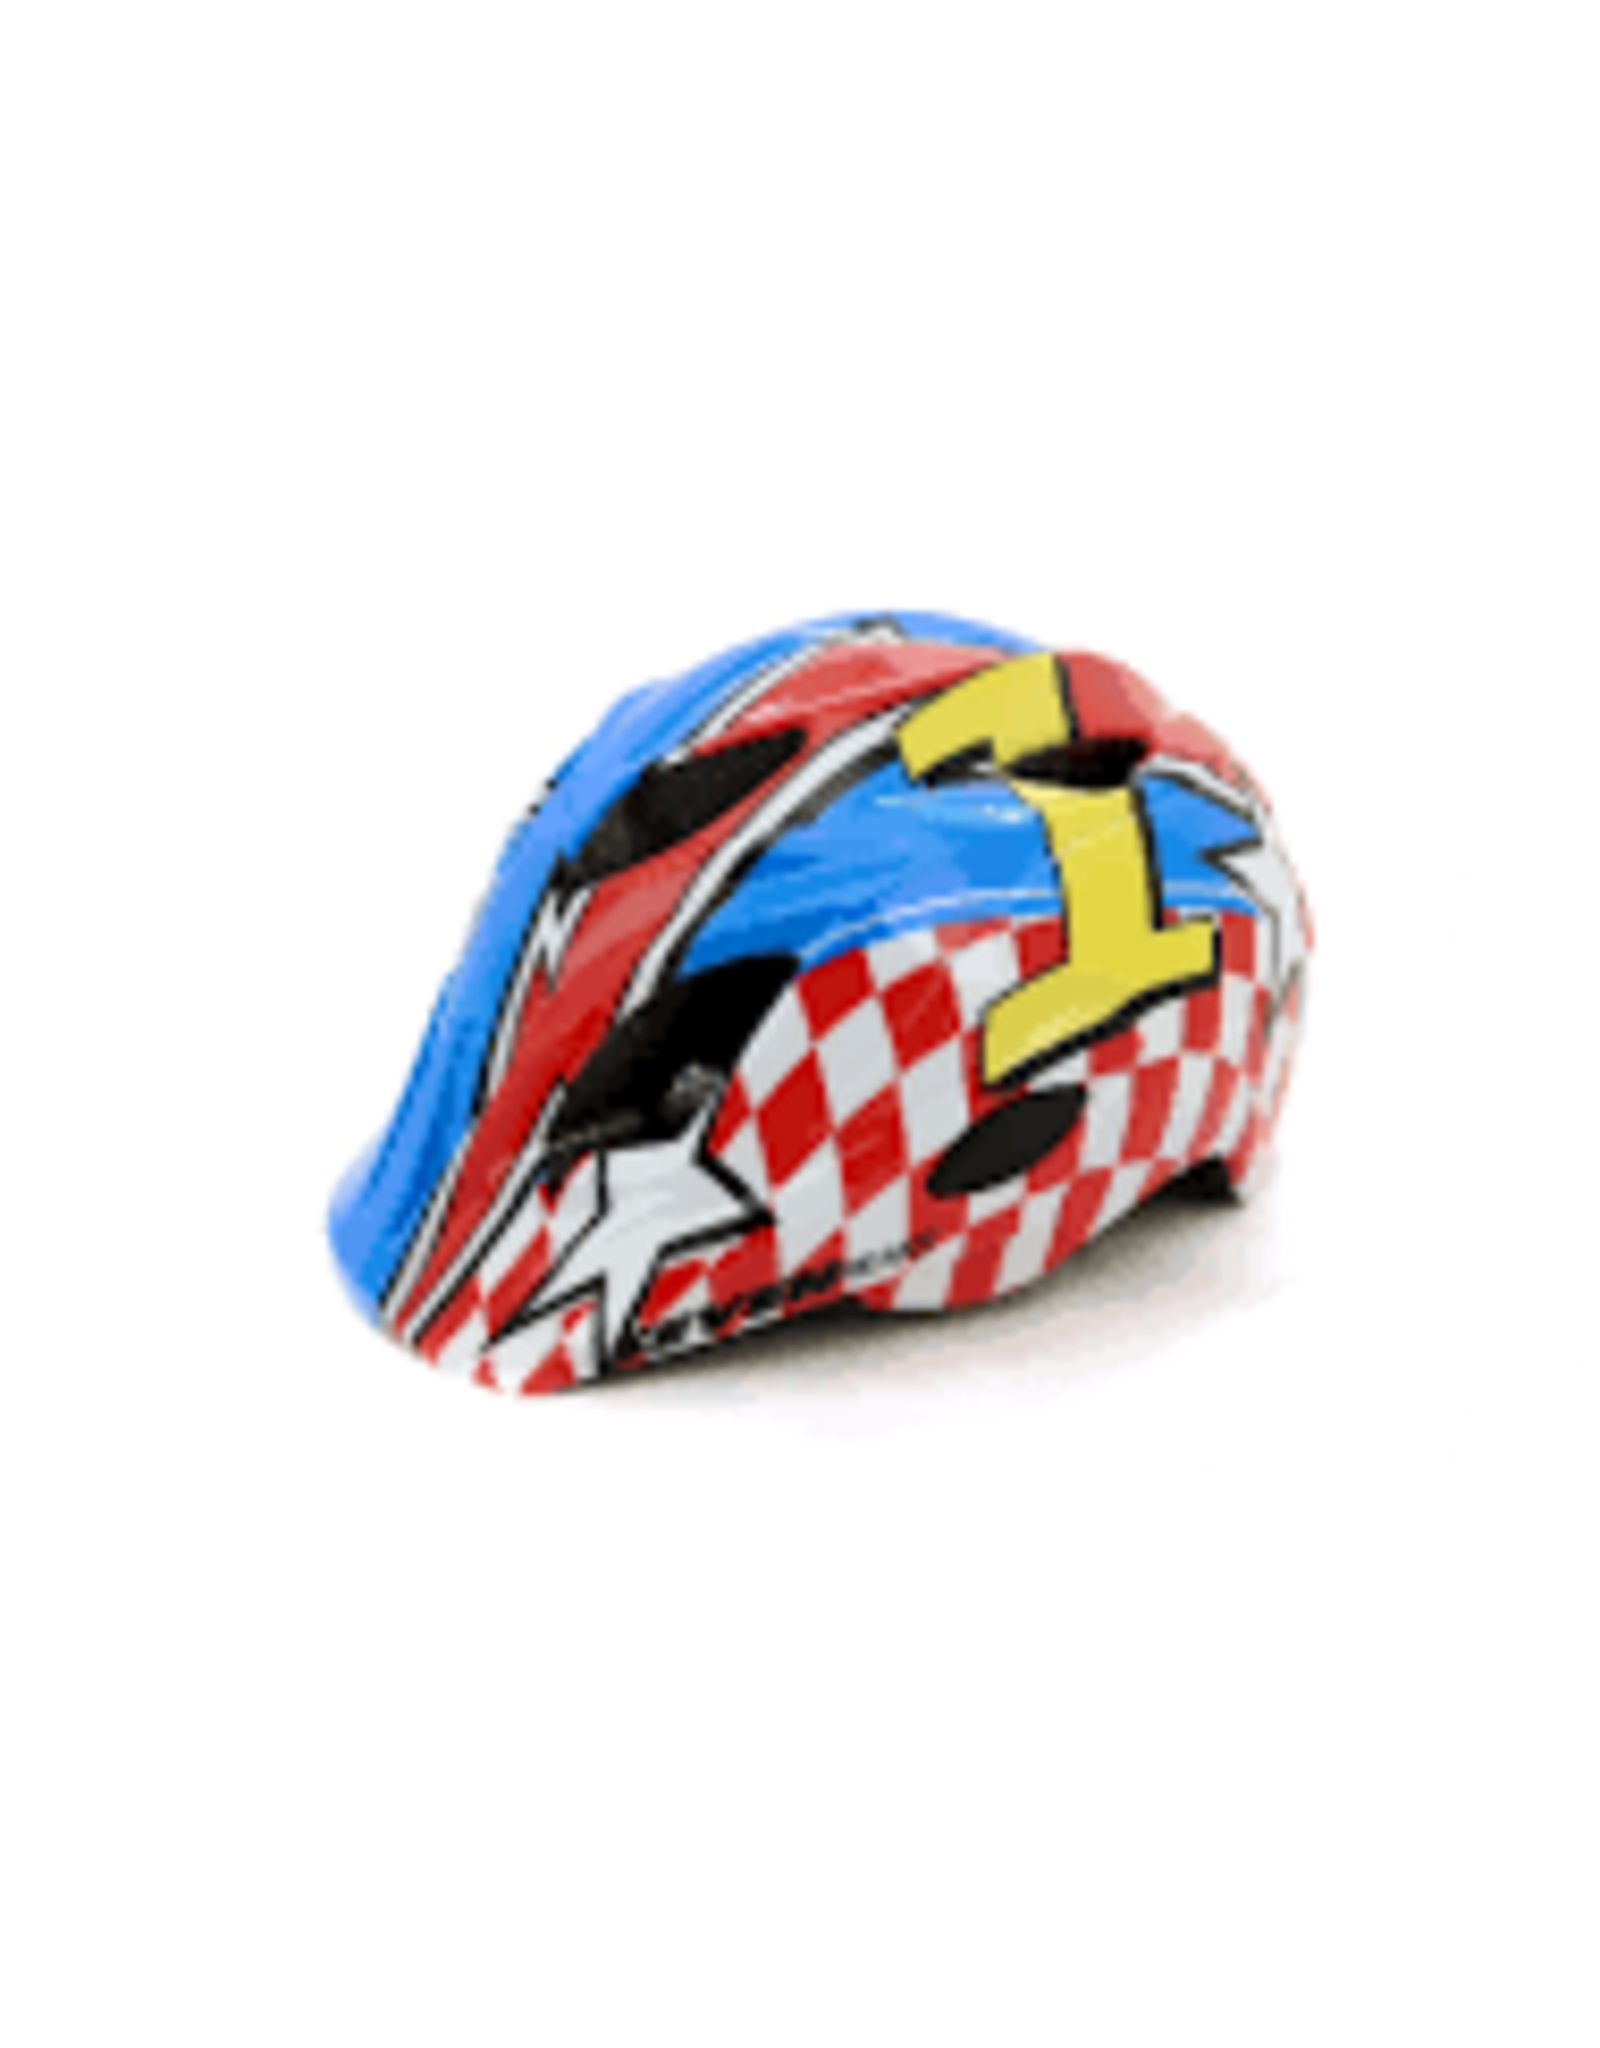 Seven Peaks CASQUE, Racer, Junior Helmet with Rear Light Large